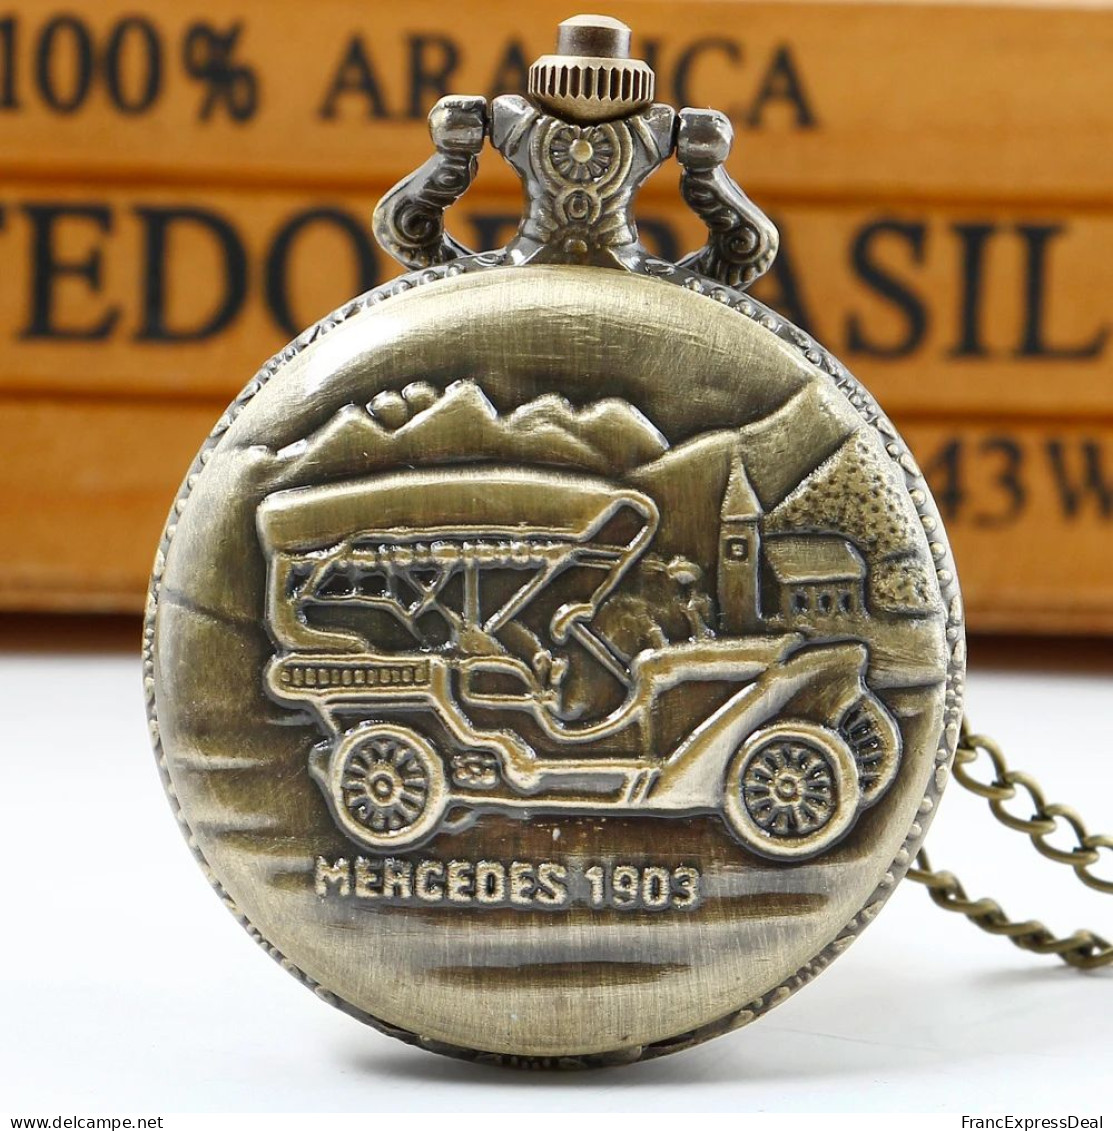 Montre Gousset NEUVE - Voiture Ancienne Mercedes 1903 - Watches: Bracket